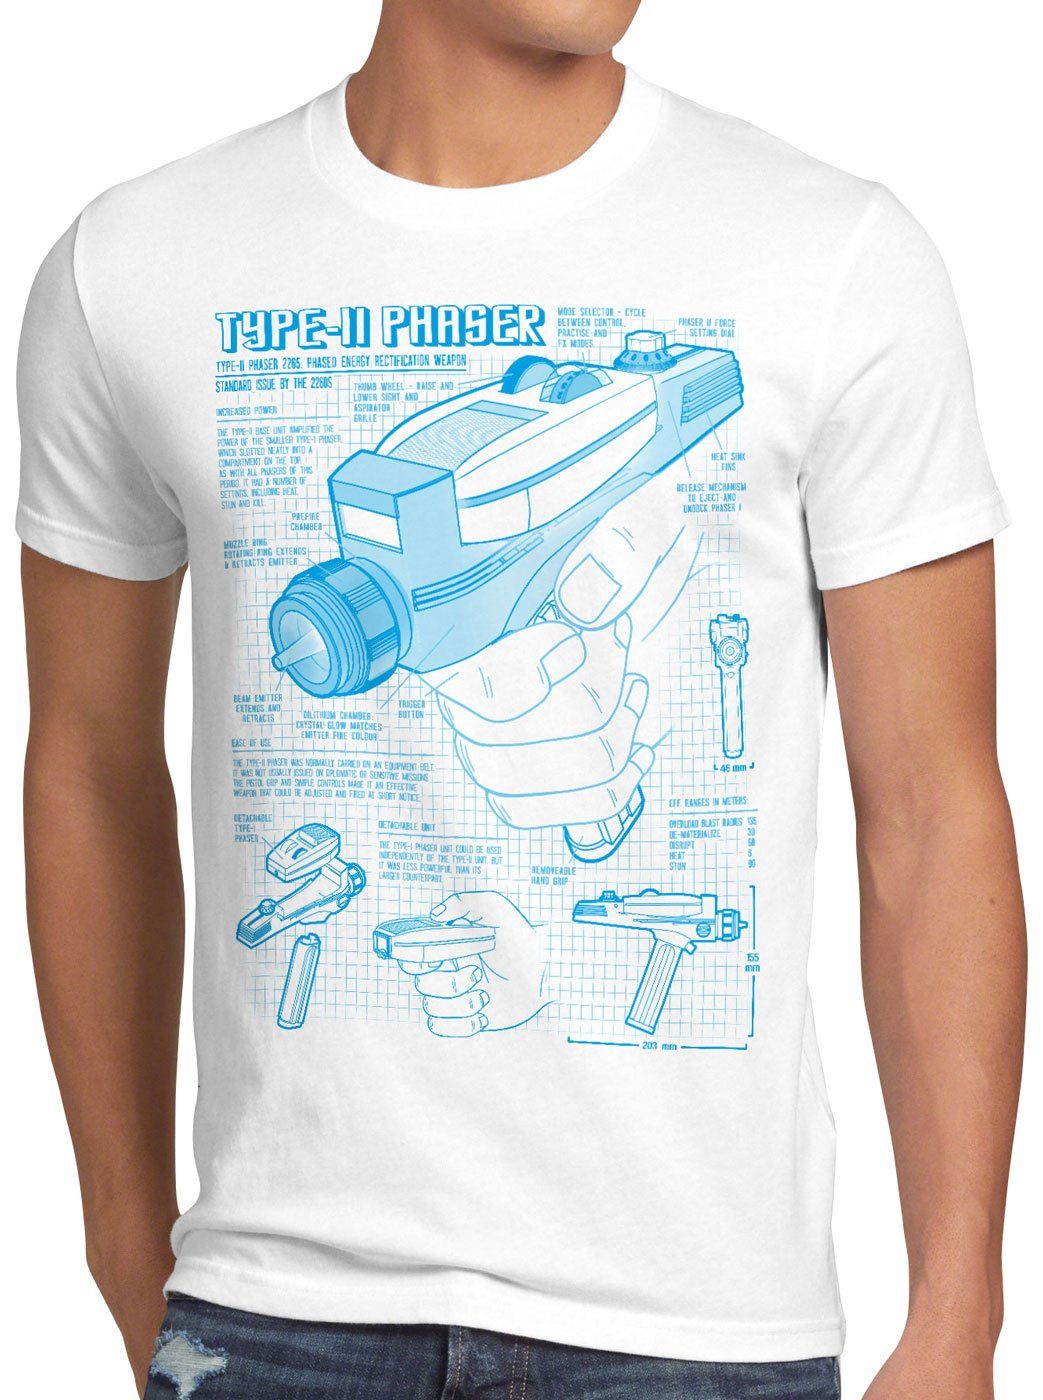 star Phaser weiß Herren trek T-Shirt NCC-1701 style3 2265 Blaupause Print-Shirt trekkie